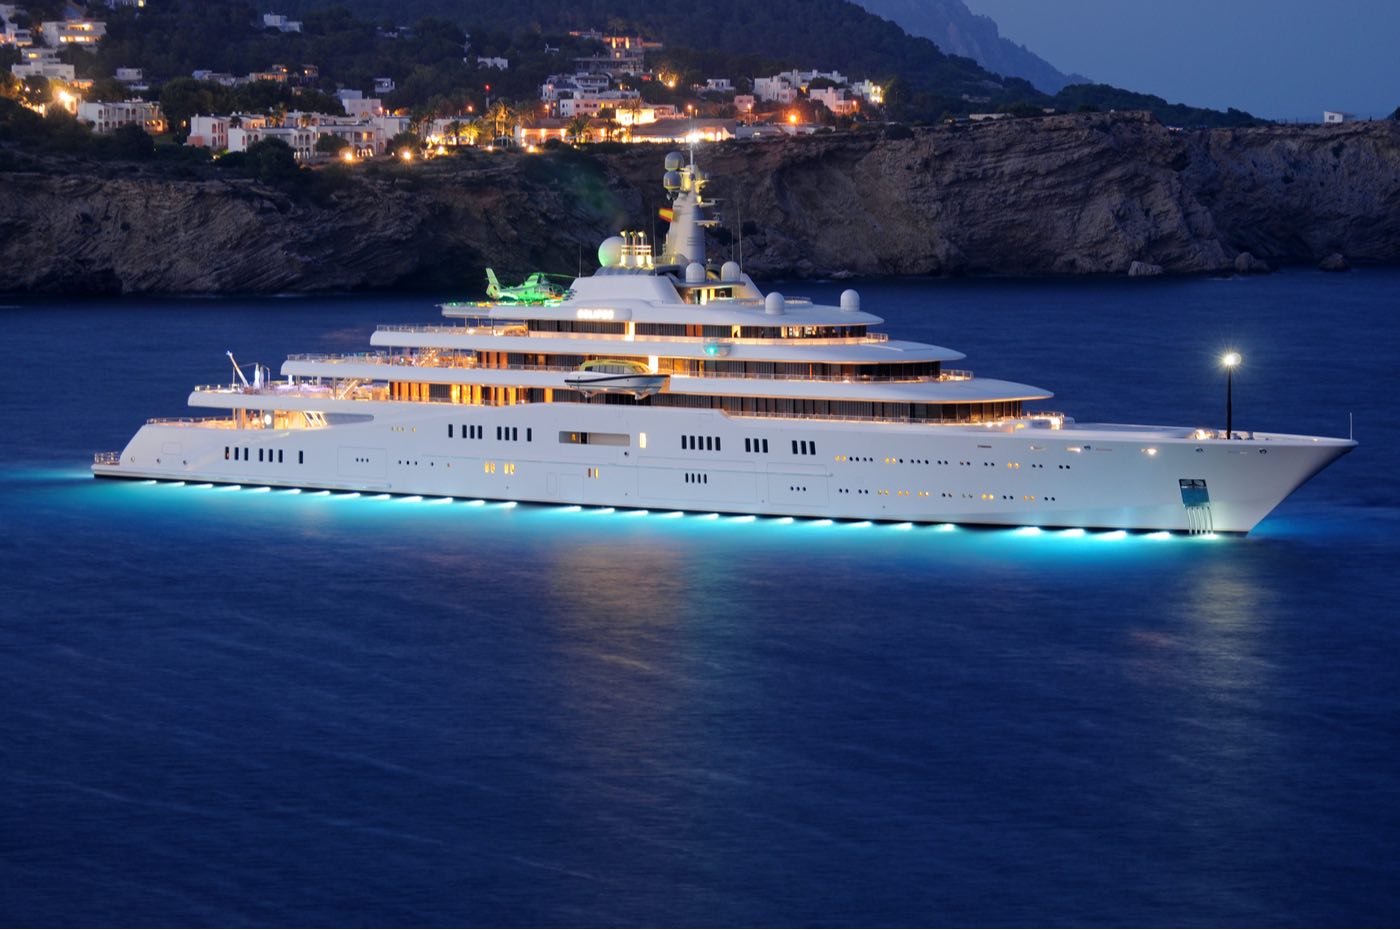 4 million pound yacht